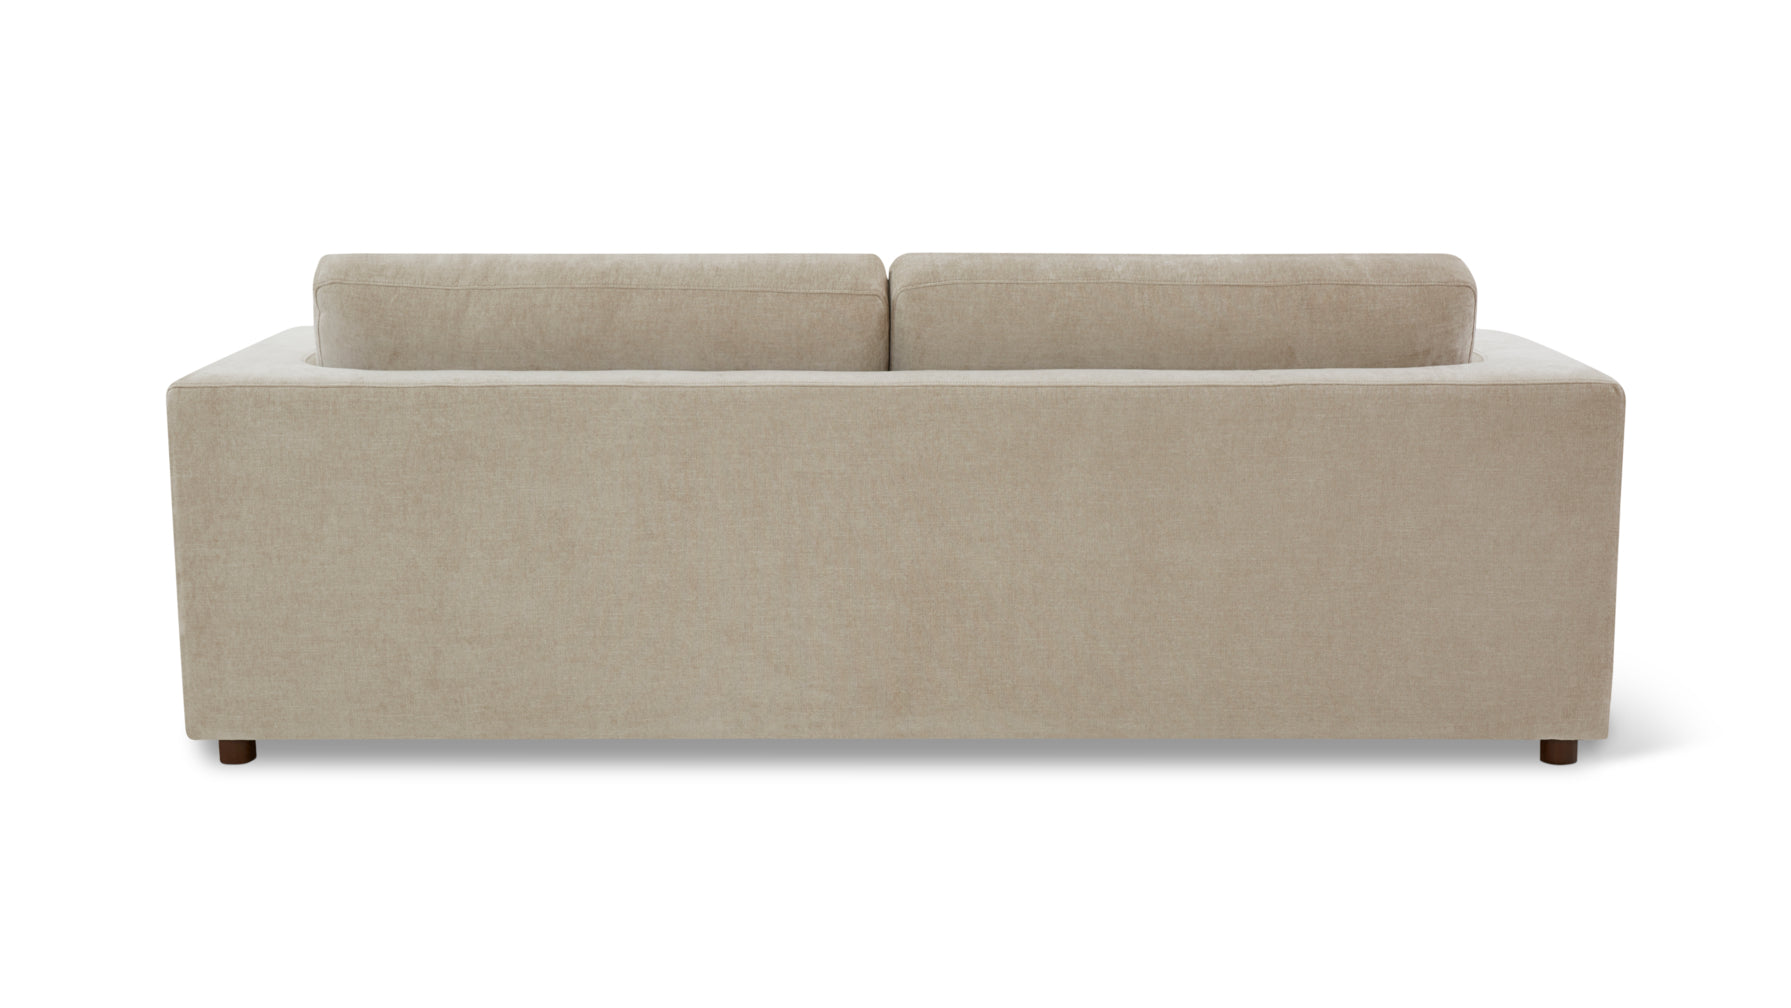 Good Company Sofa, 3 Seater, Cashew - Image 4